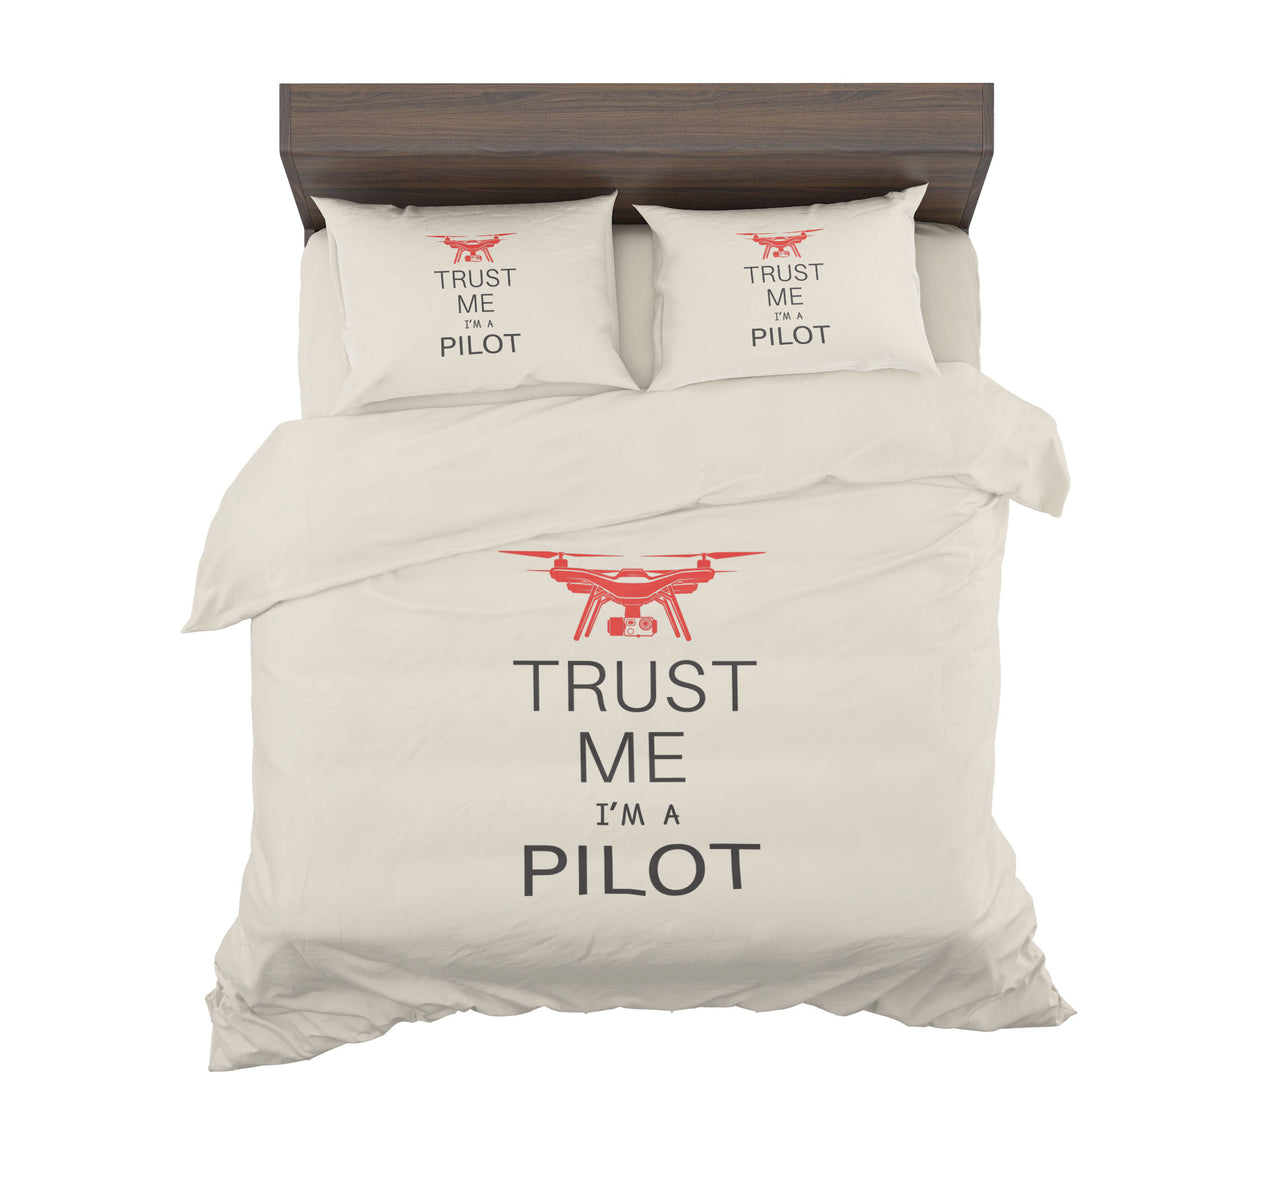 Trust Me I'm a Pilot (Drone) Designed Bedding Sets